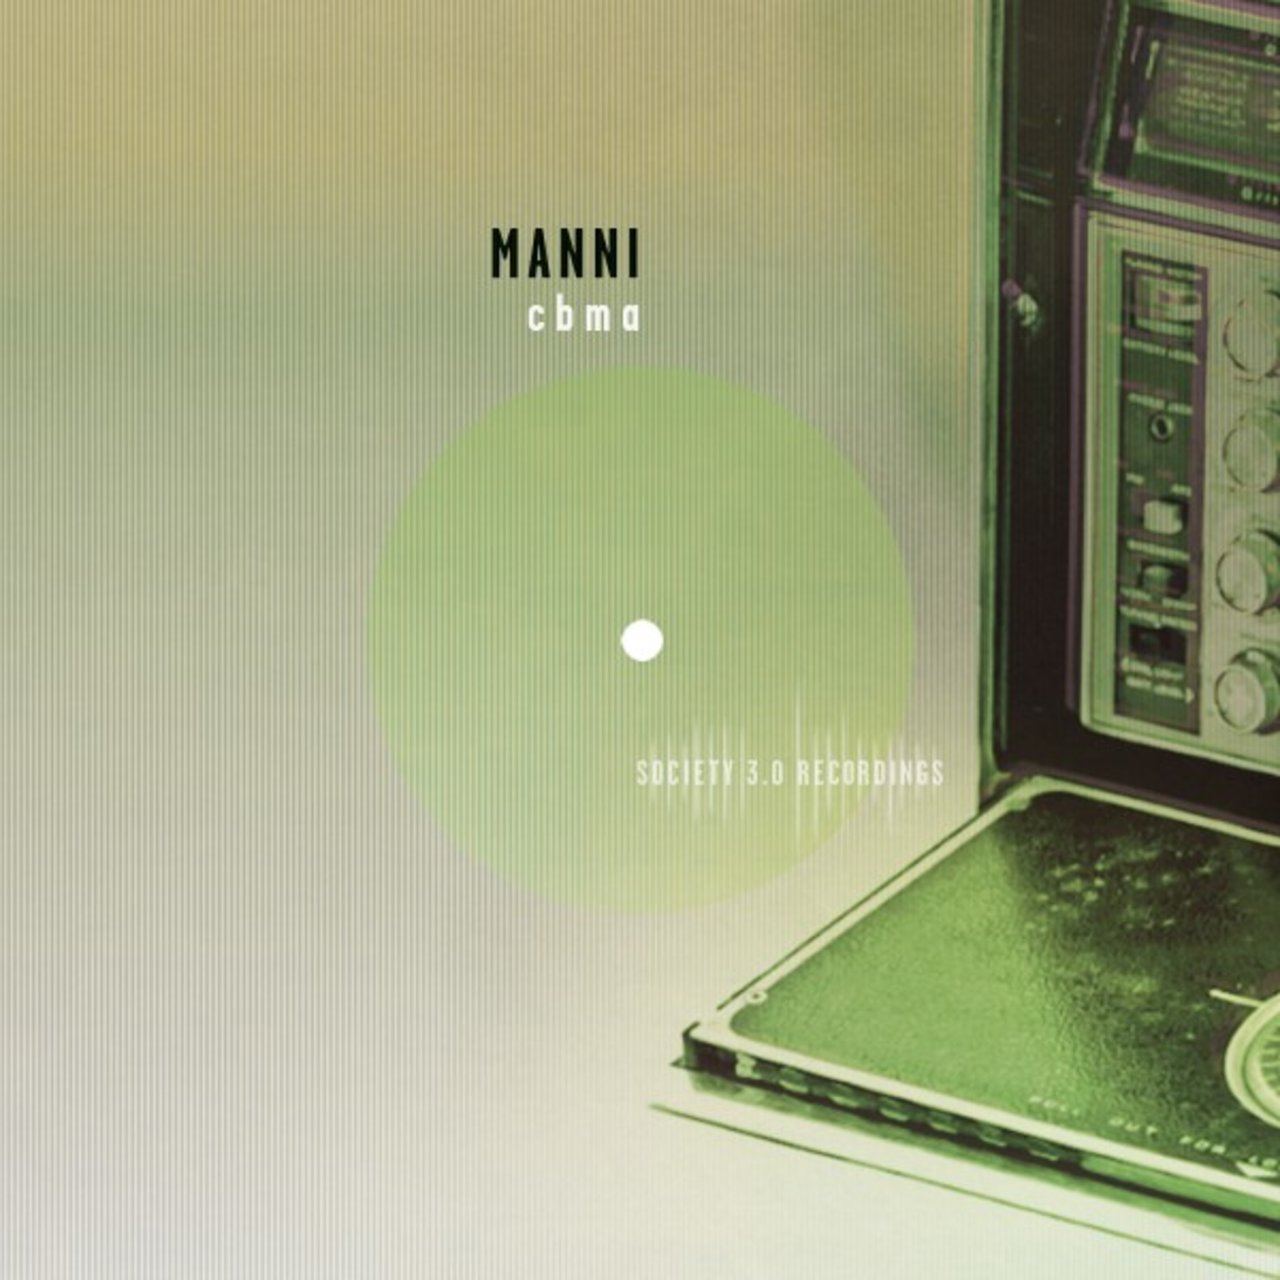 Manni - Cbma / Society 3.0